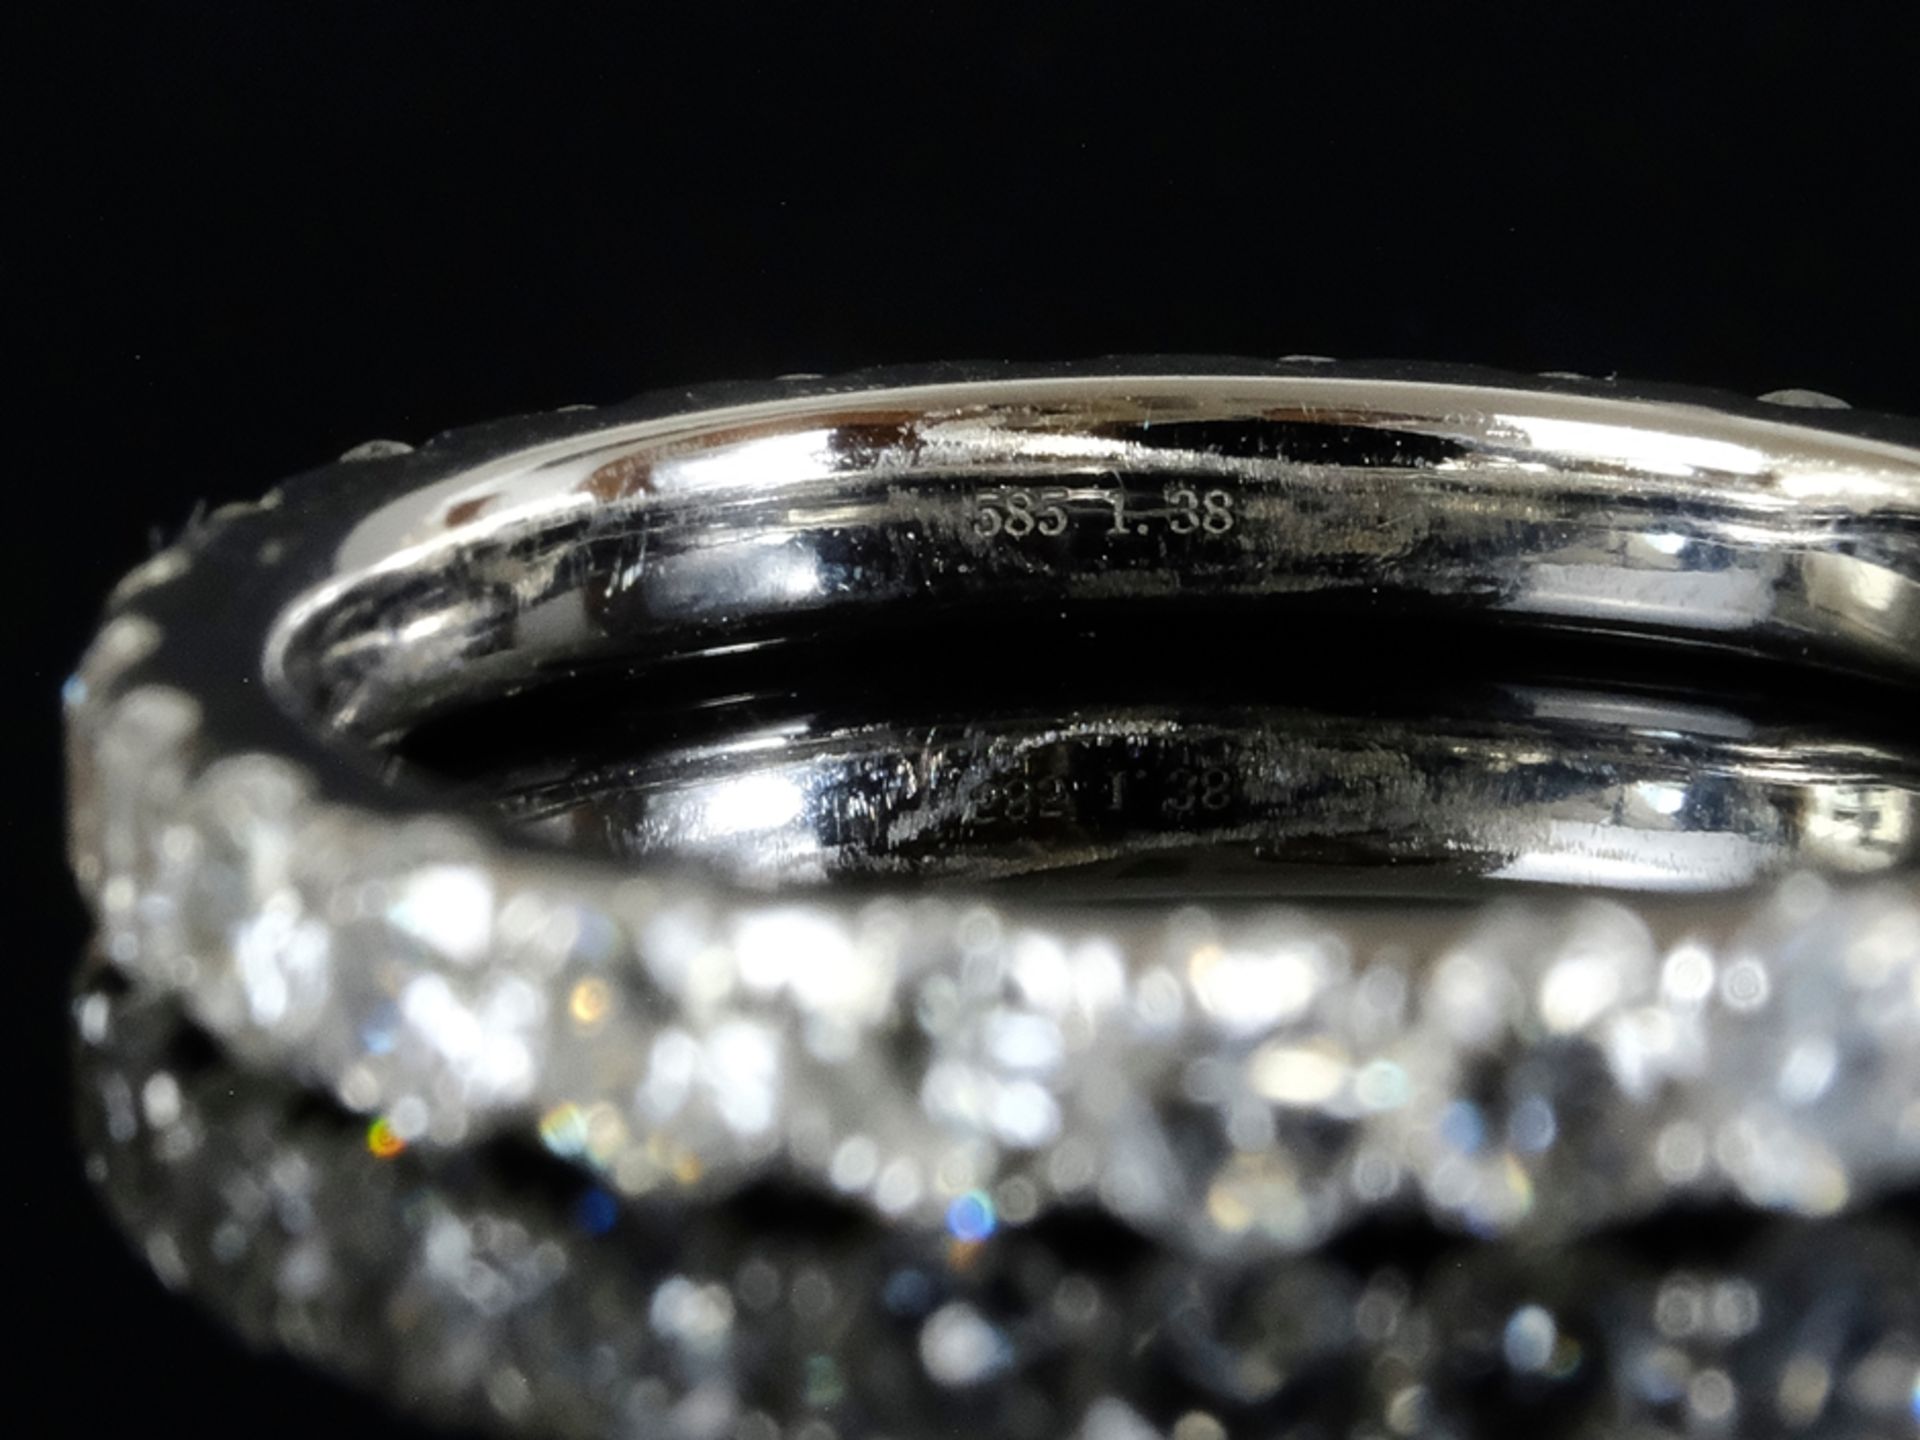 PLEASANT BRILLIANT MEMORY RING, set all around with 26 brilliant-cut diamonds, total around 1.38ct, - Image 3 of 3